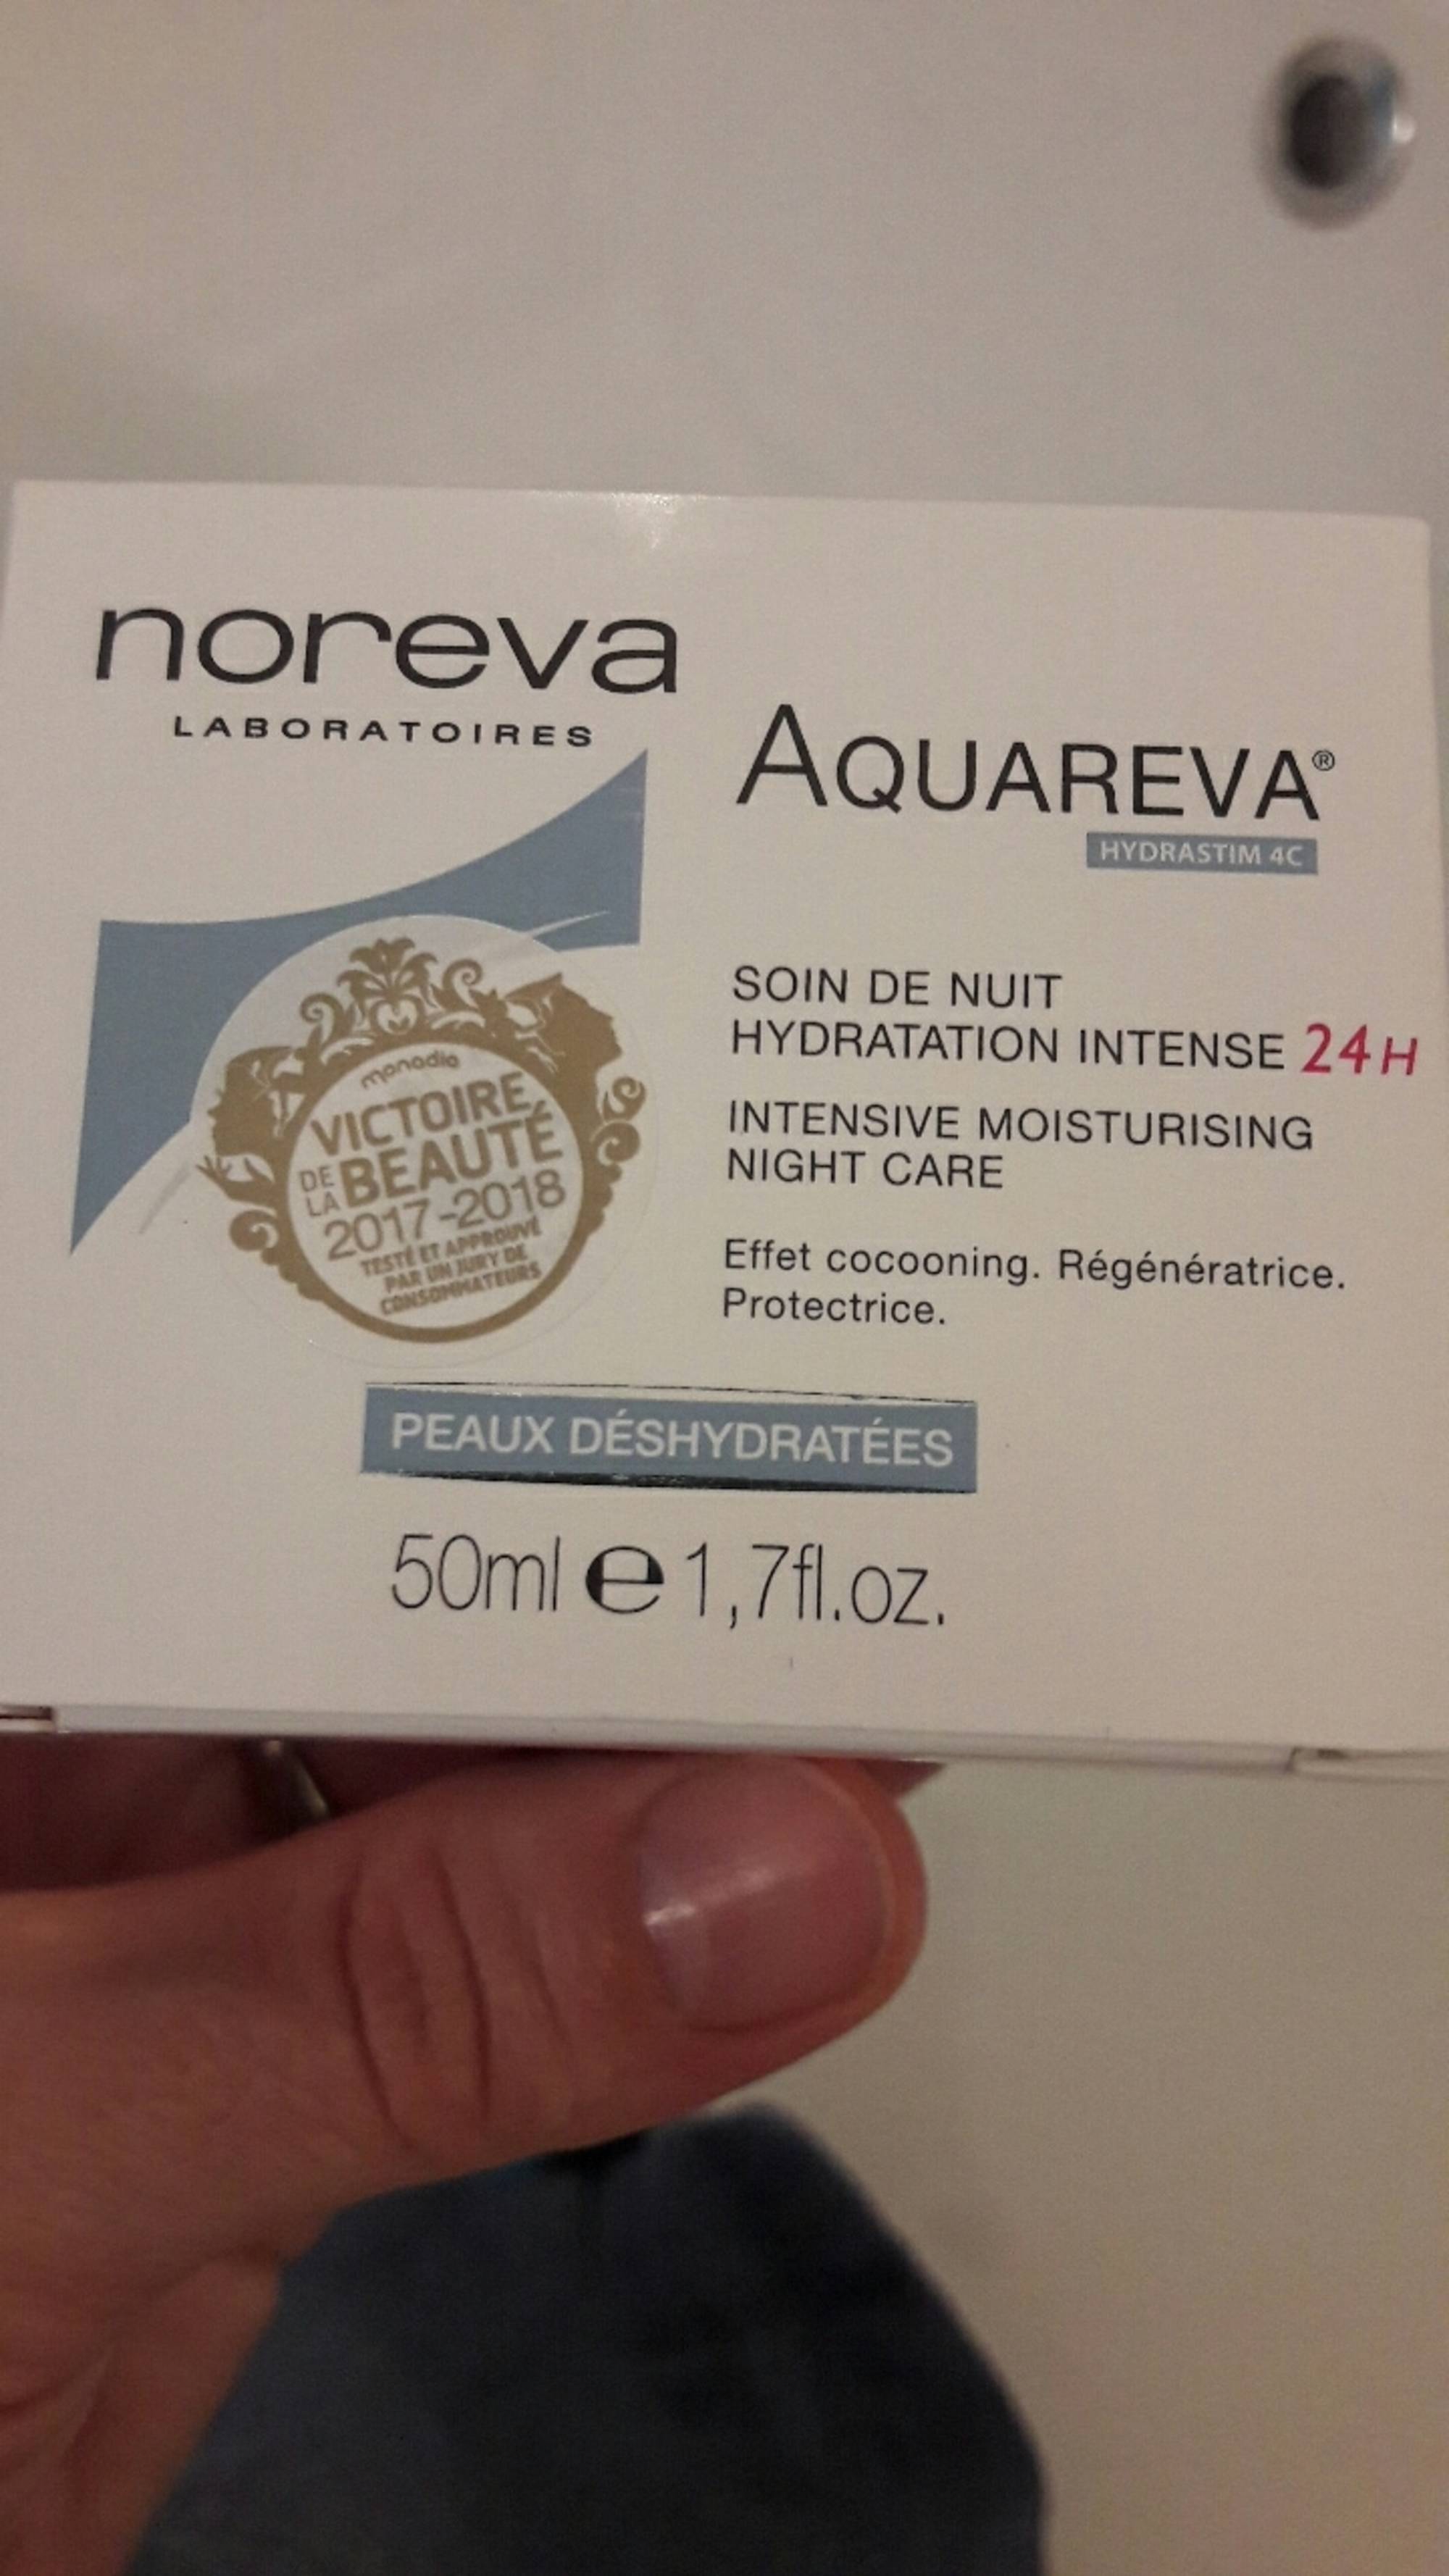 NOREVA - Aquareva - Soin de nuit hydratation intense